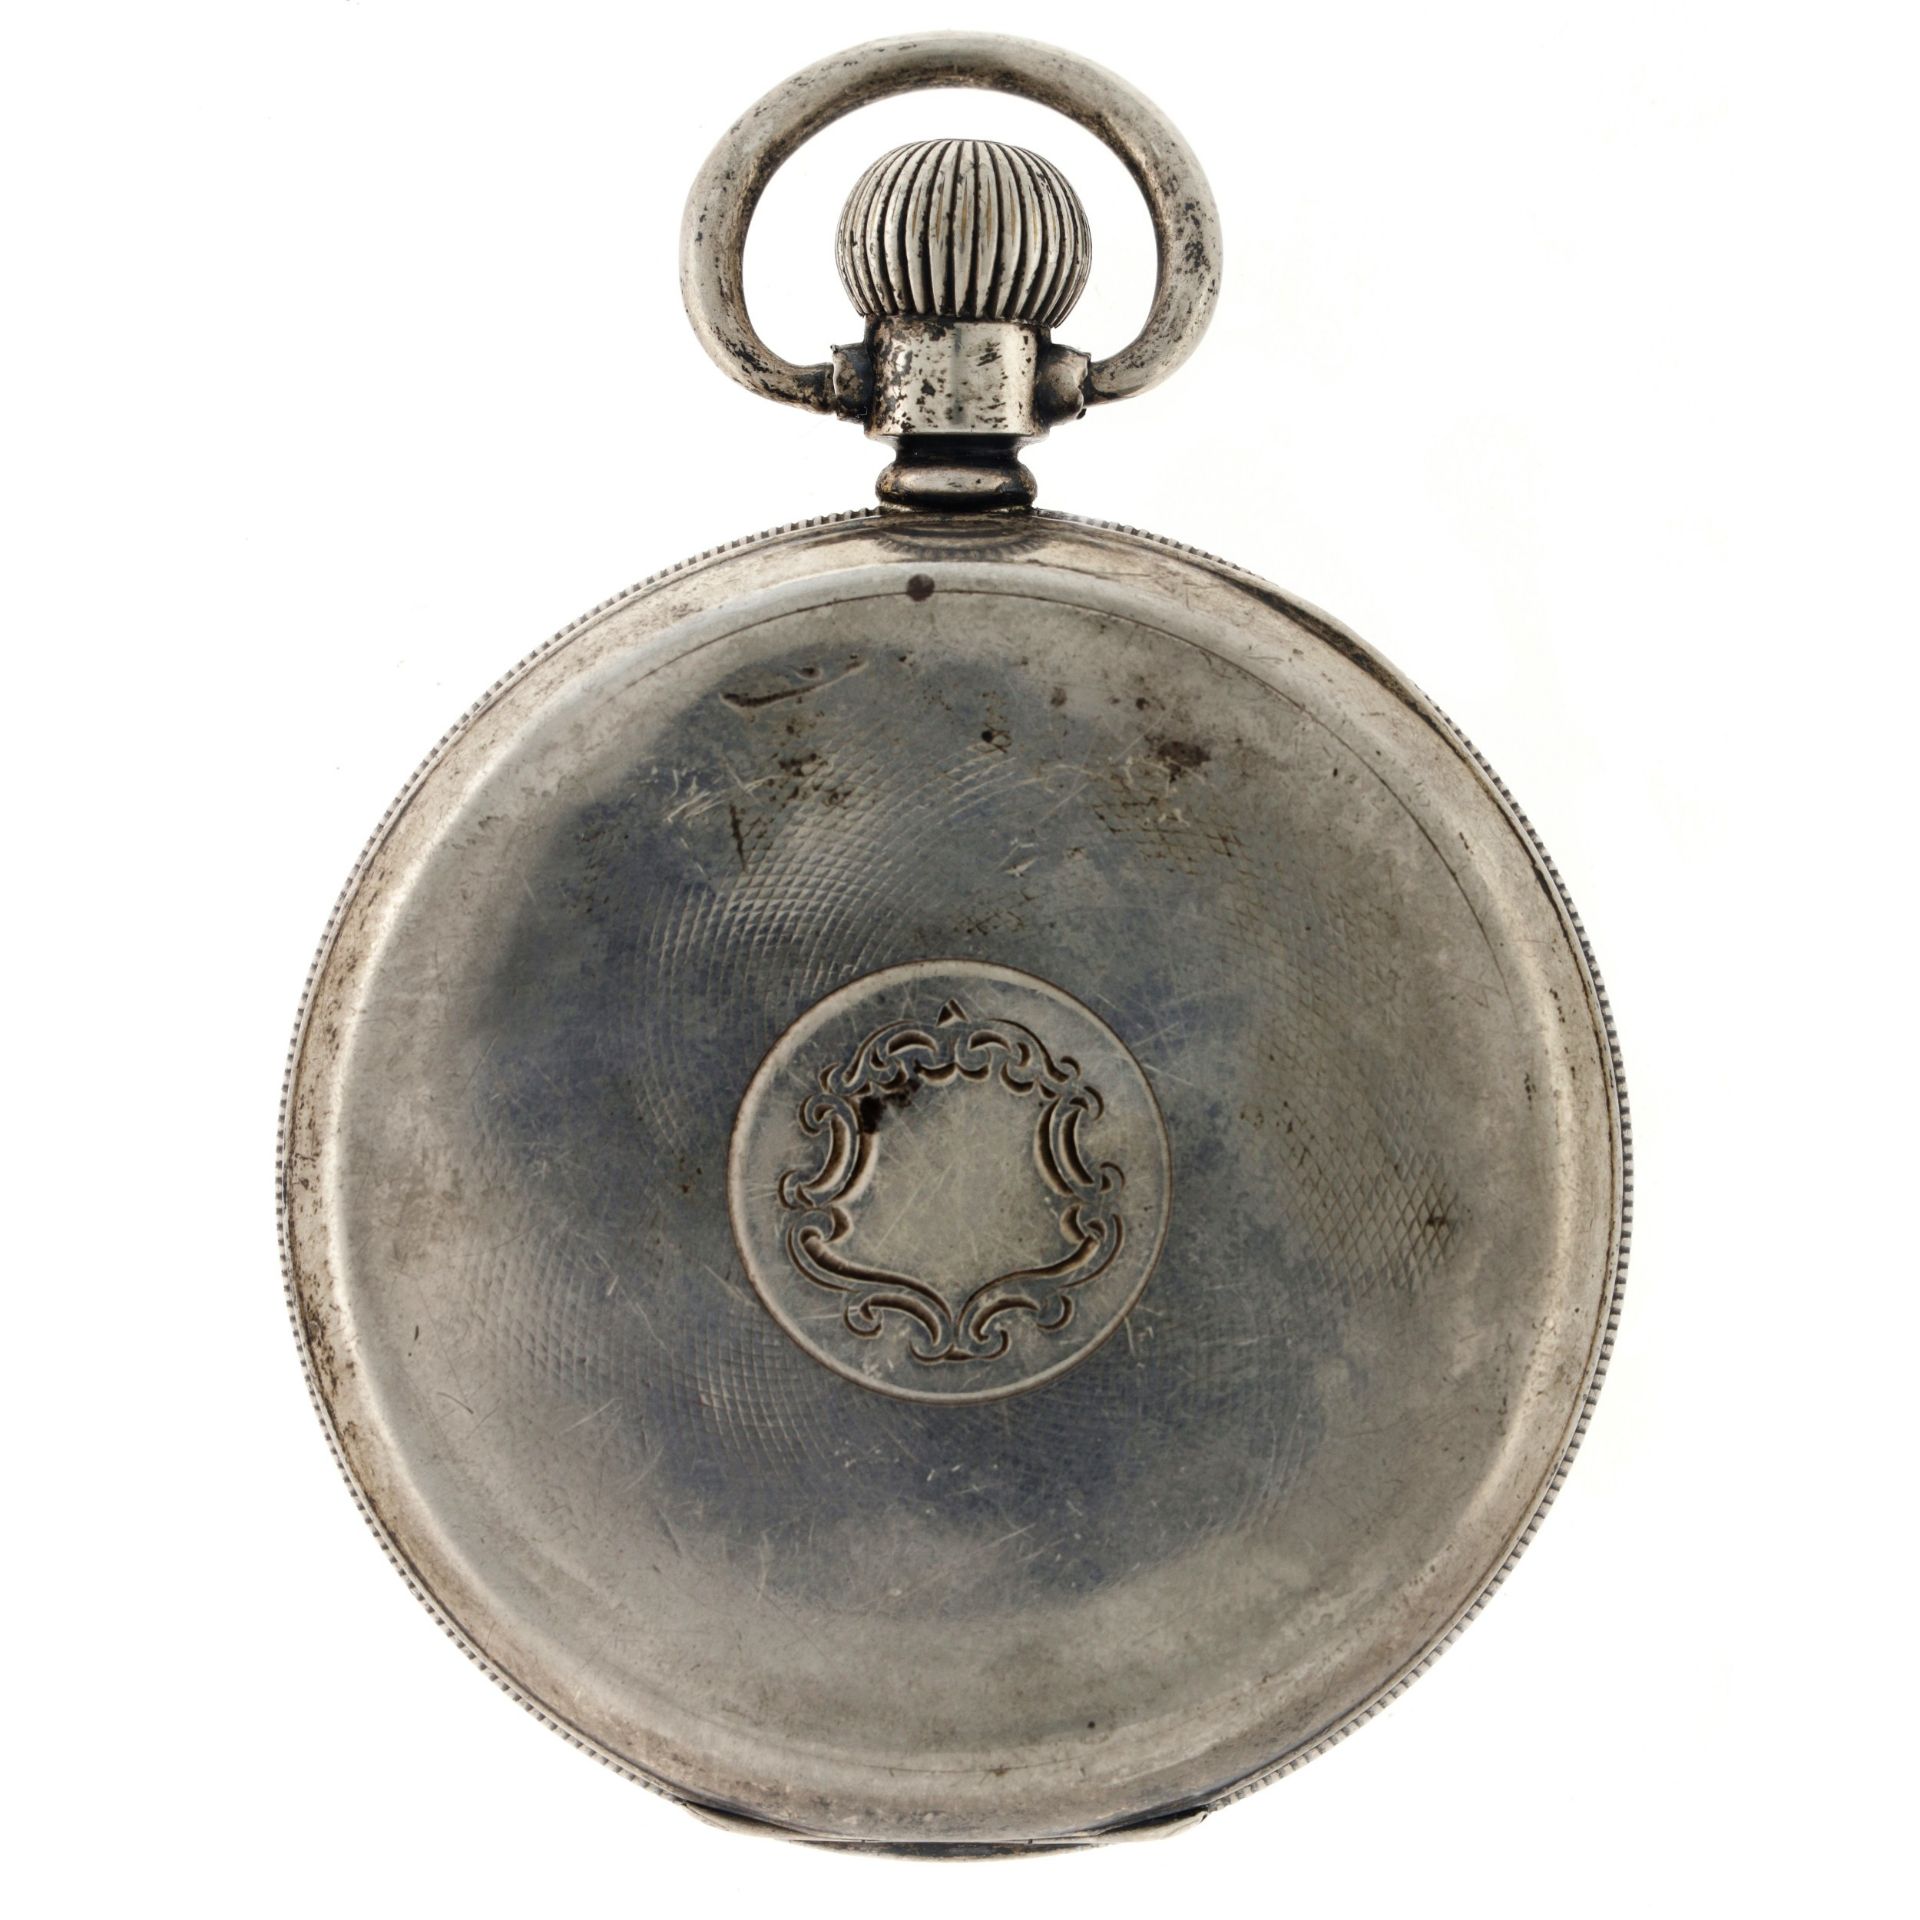 No Reserve - Waltham U.S.A. silver pocketwatch (925/1000) - Men's pocketwatch - approx. 1918. - Bild 5 aus 7